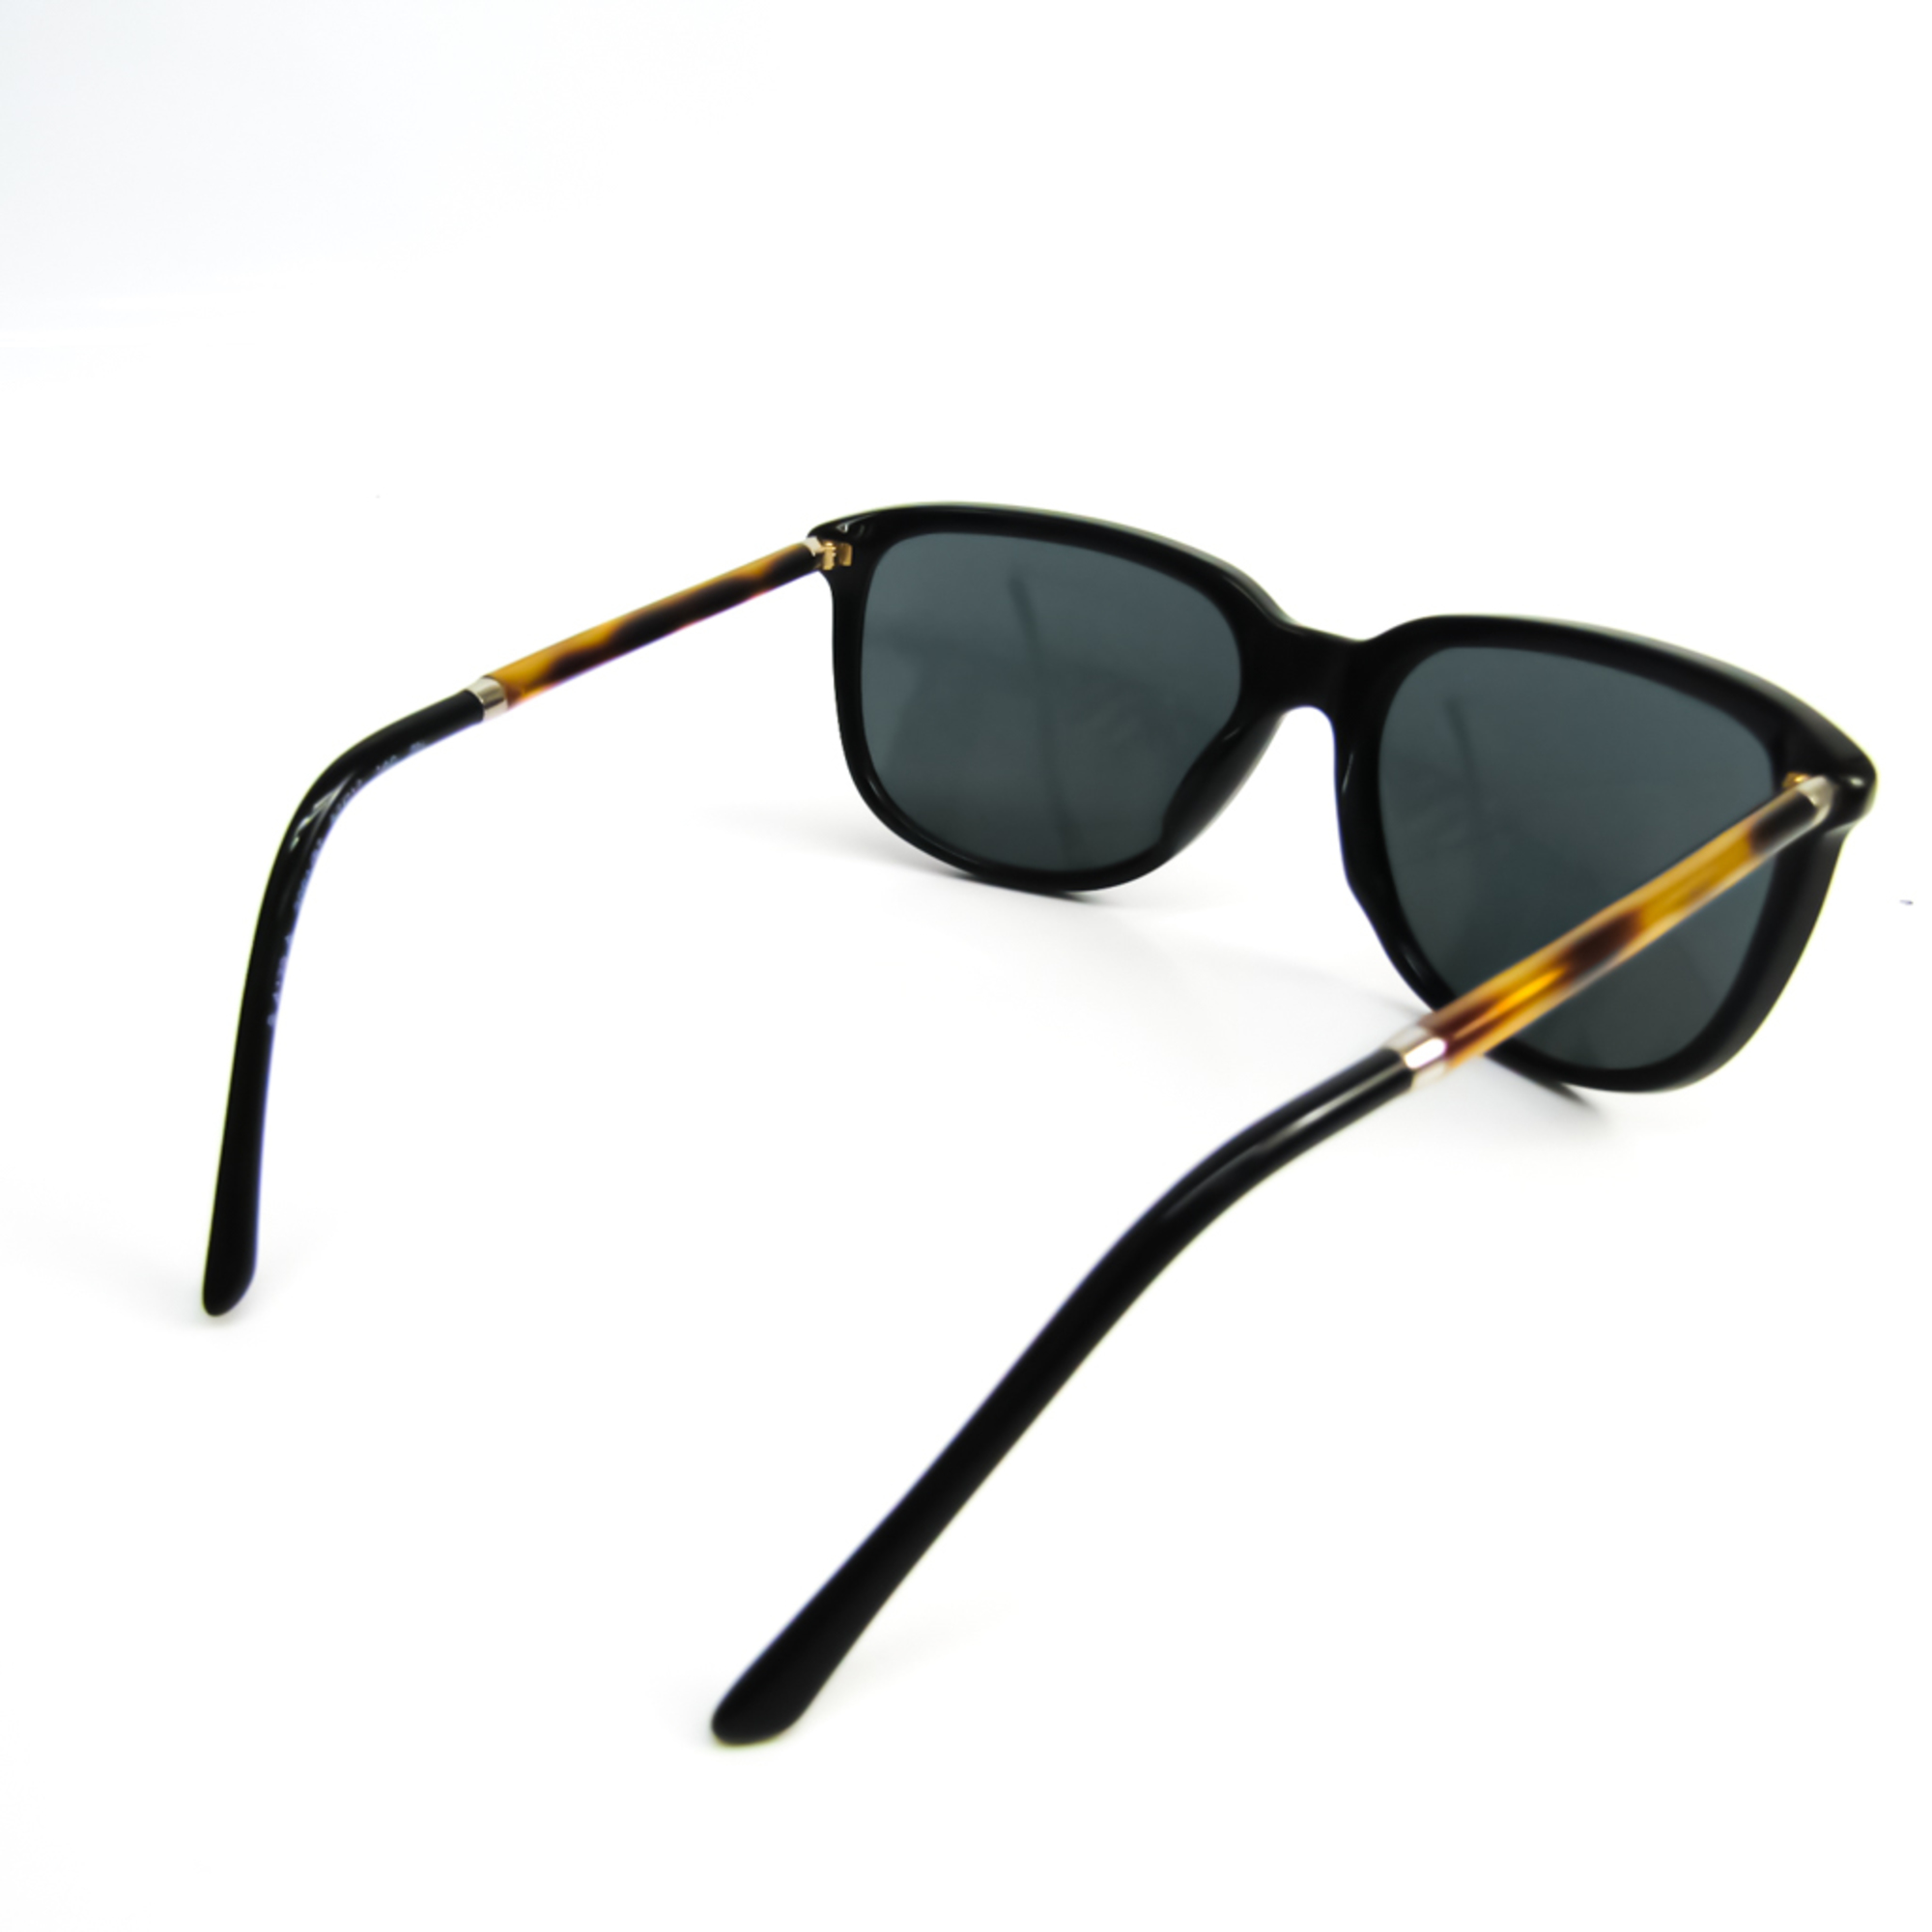 Burberry Women's Wellington Sunglasses Black,Brown B4129-A